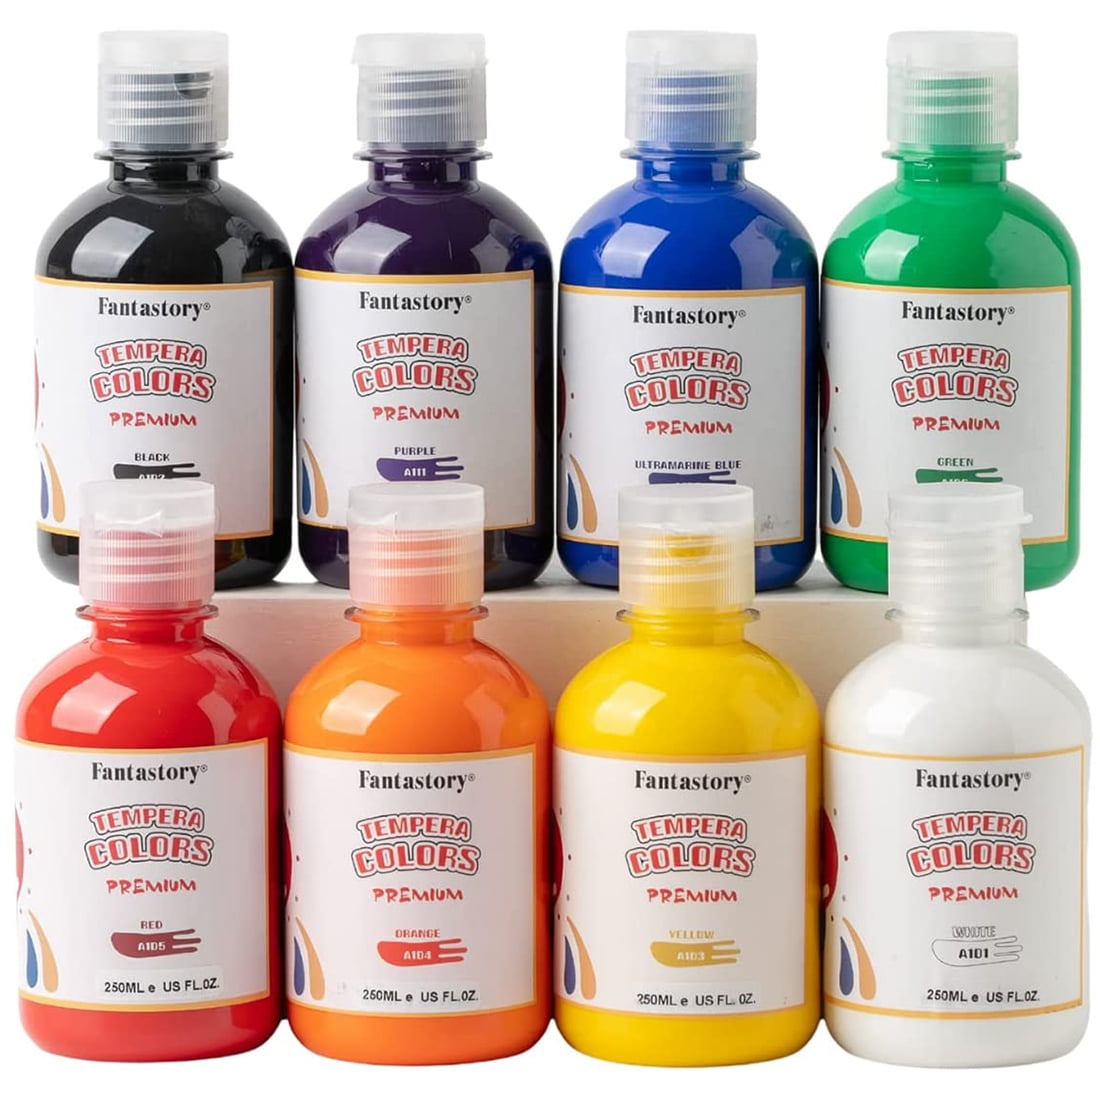 Playkidiz Rainbow Watercolor Washable Classic Colors Painting Set, 12 Piece Complete Paint Set for Kids, Includes 6 Foam Paintbrushes and 6